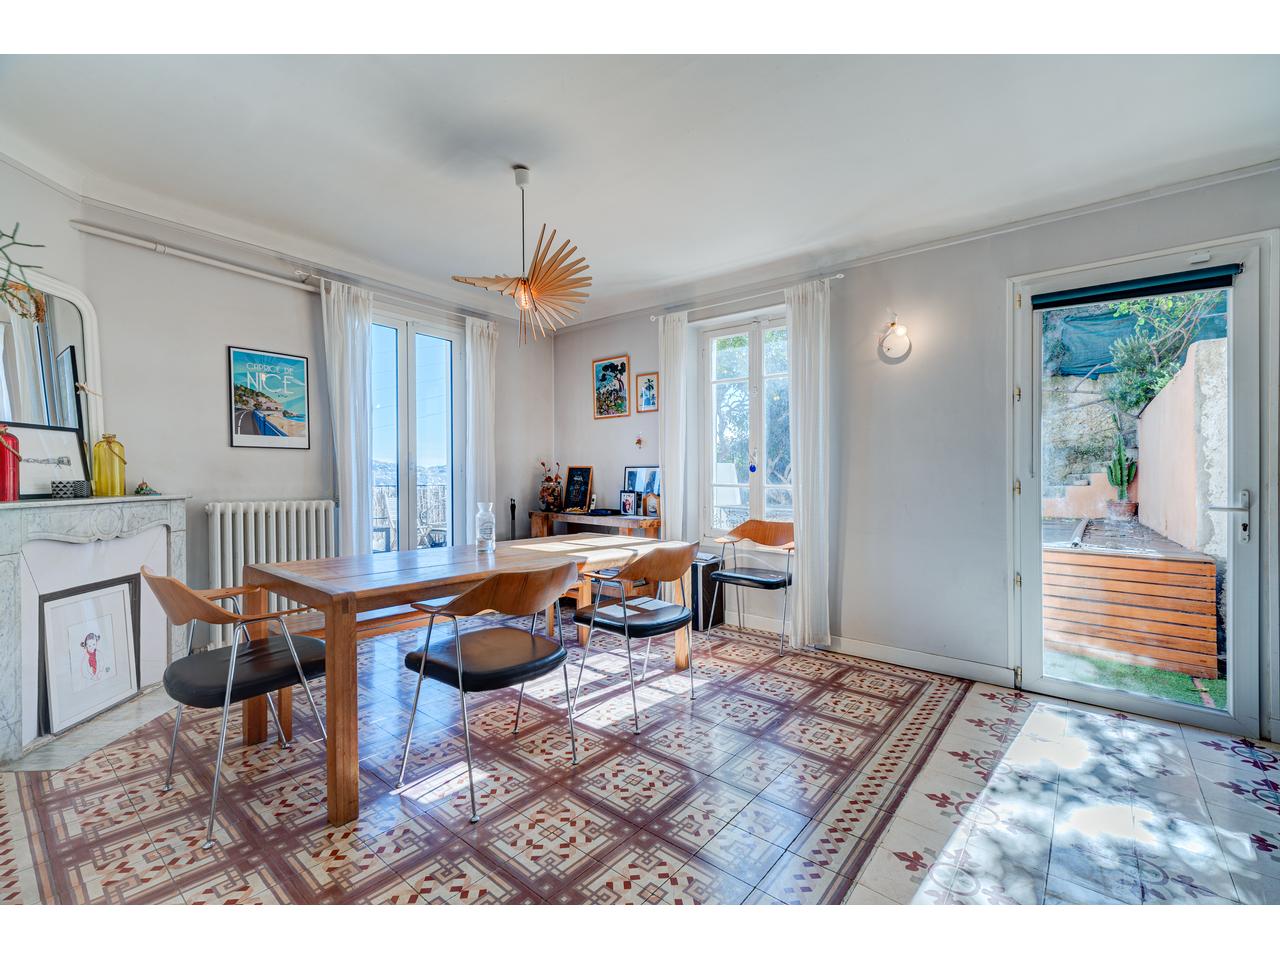 Nice Riviera - Agence Immobiliére Nice Côte d'Azur|Maison  4 Rooms 115m2  for sale   940 000 €